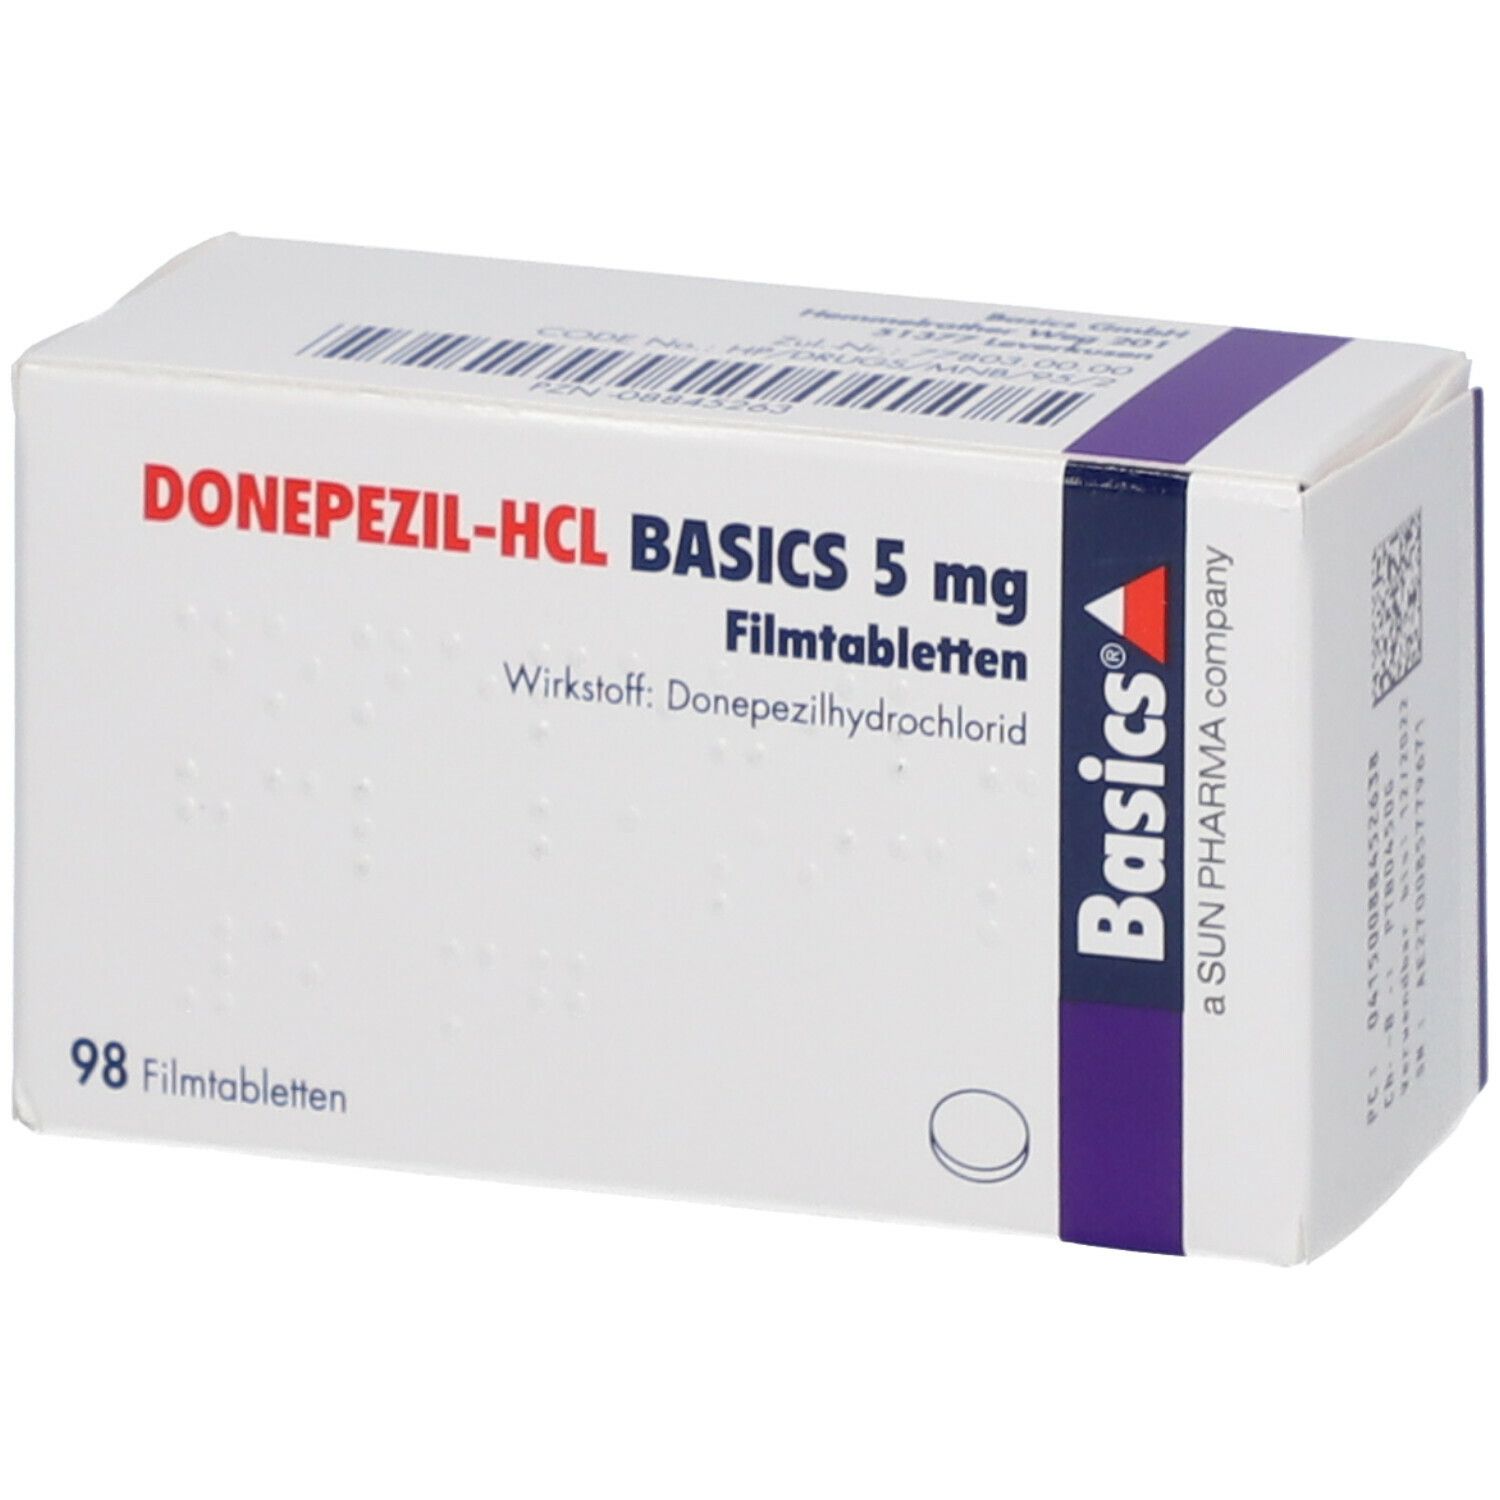 DONEPEZIL-HCL BASICS 5 mg